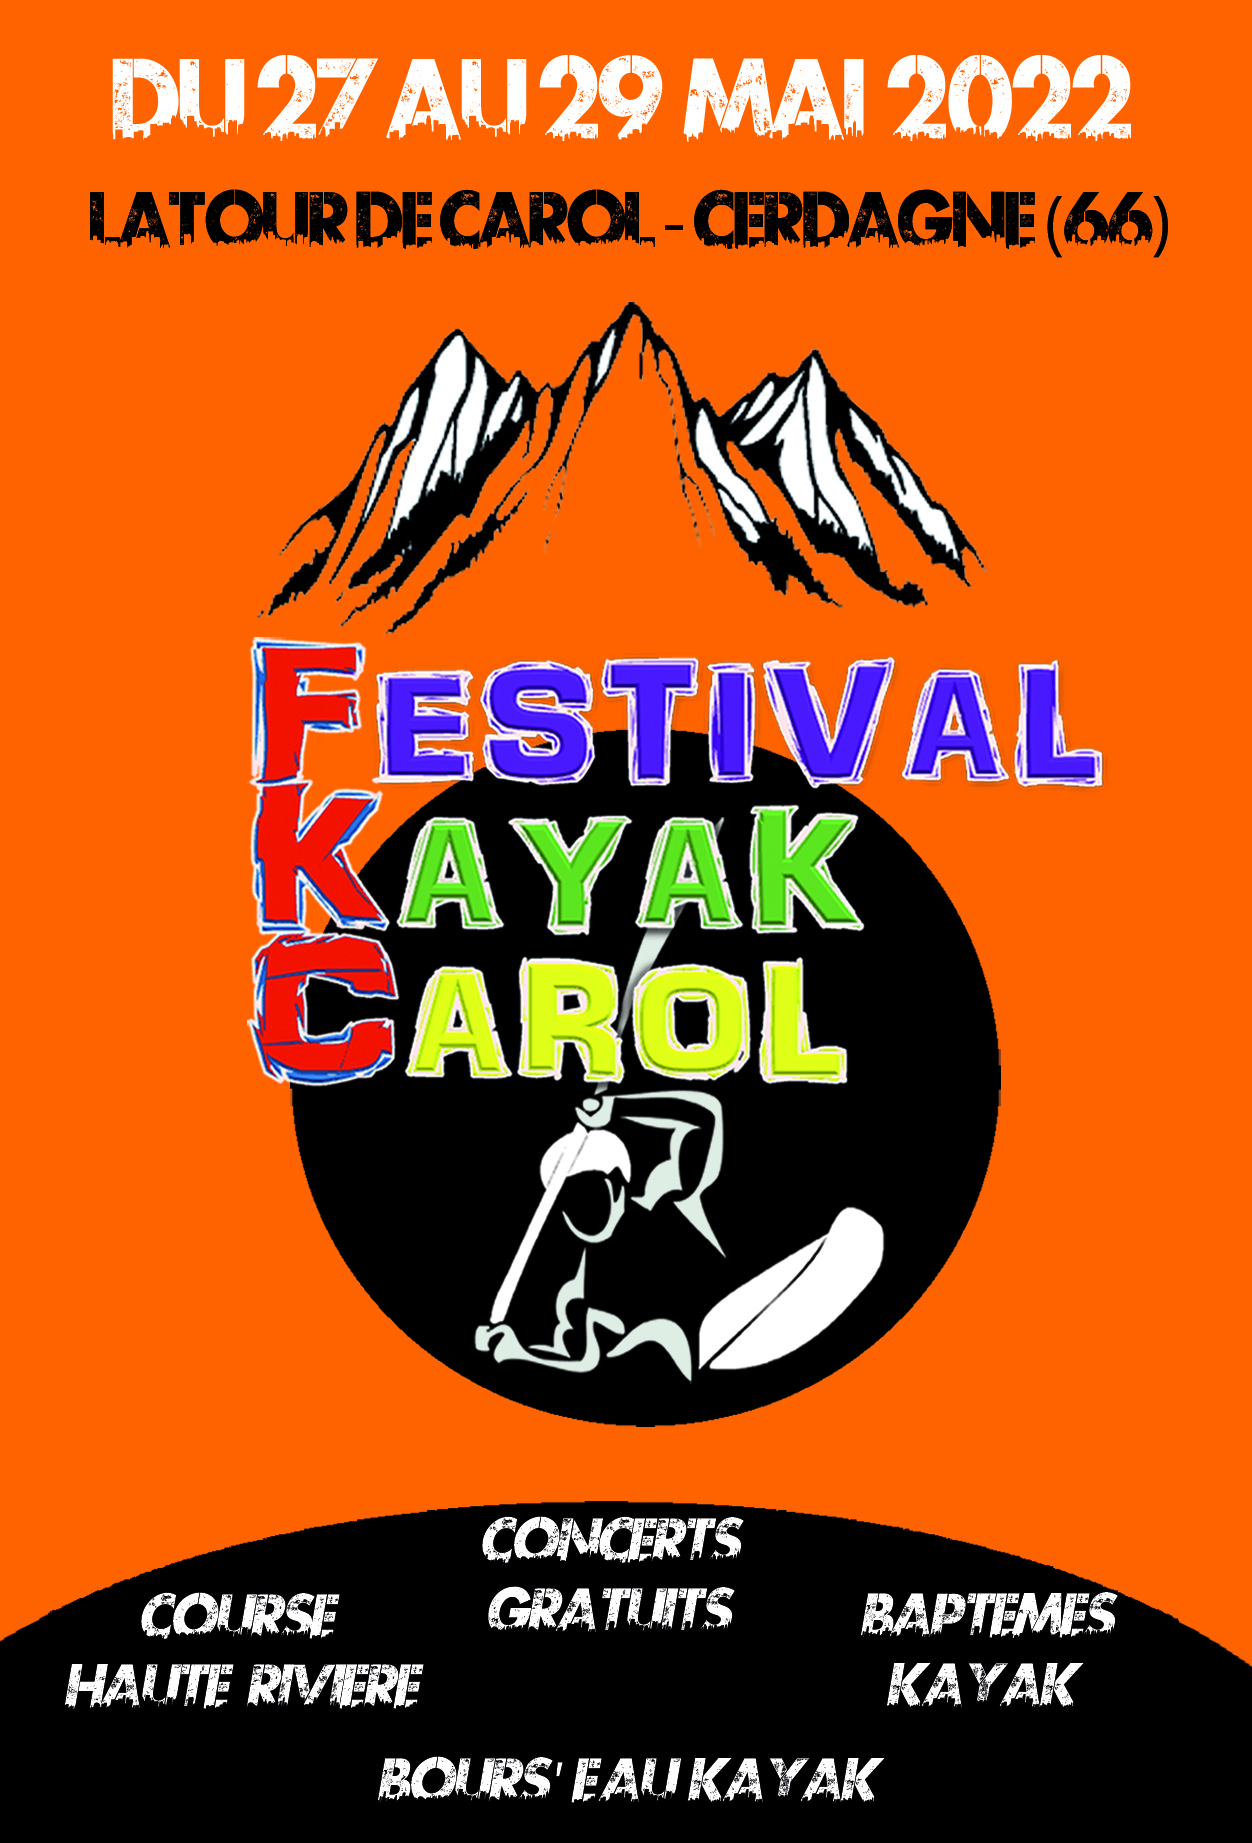 FESTIVAL KAYAK CAROL – LATOUR DE CAROL